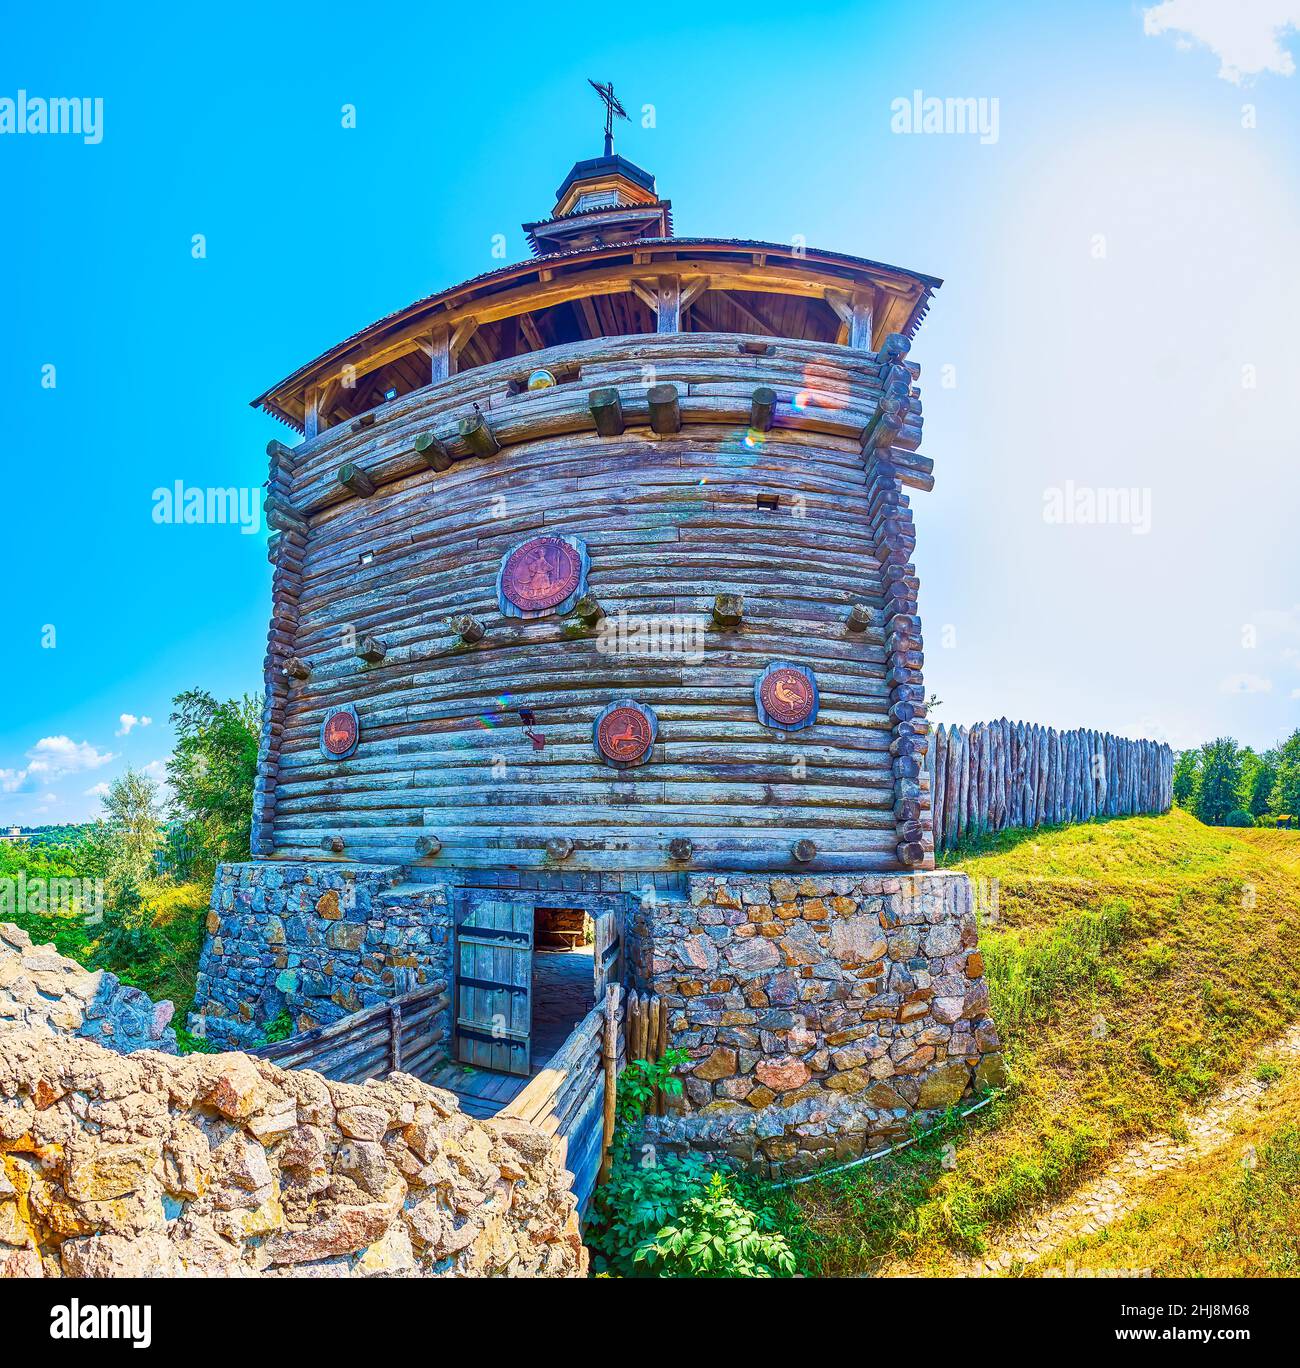 The high wooden defensive tower with stone foundation and stockade of Zaporizhian Sich Fort scansen in Zaporizhzhia, Ukraine Stock Photo